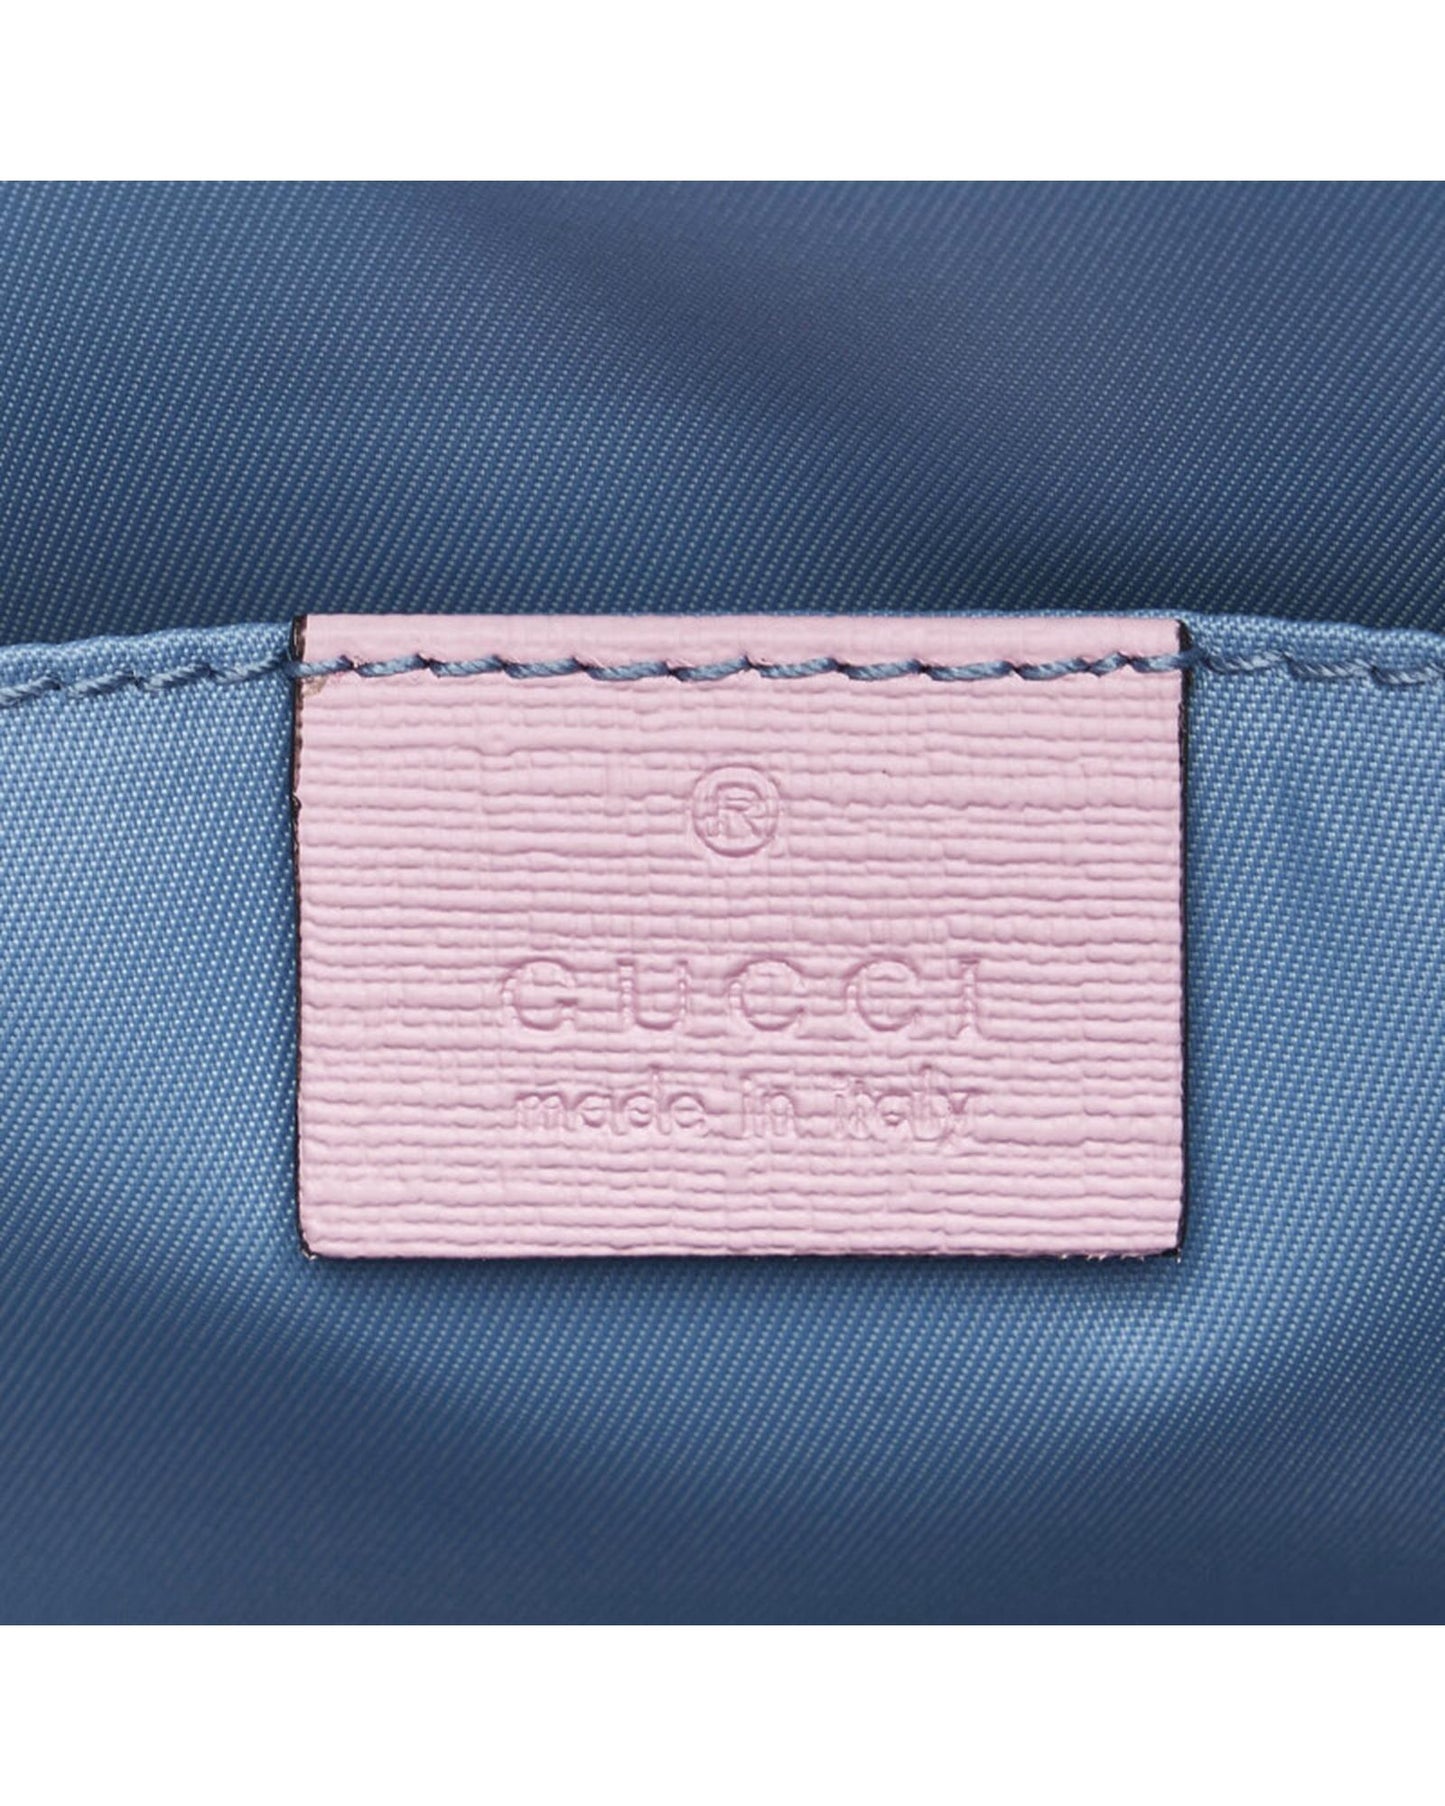 Gucci Women's Supreme Rabbit Handbag in Brown in Brown